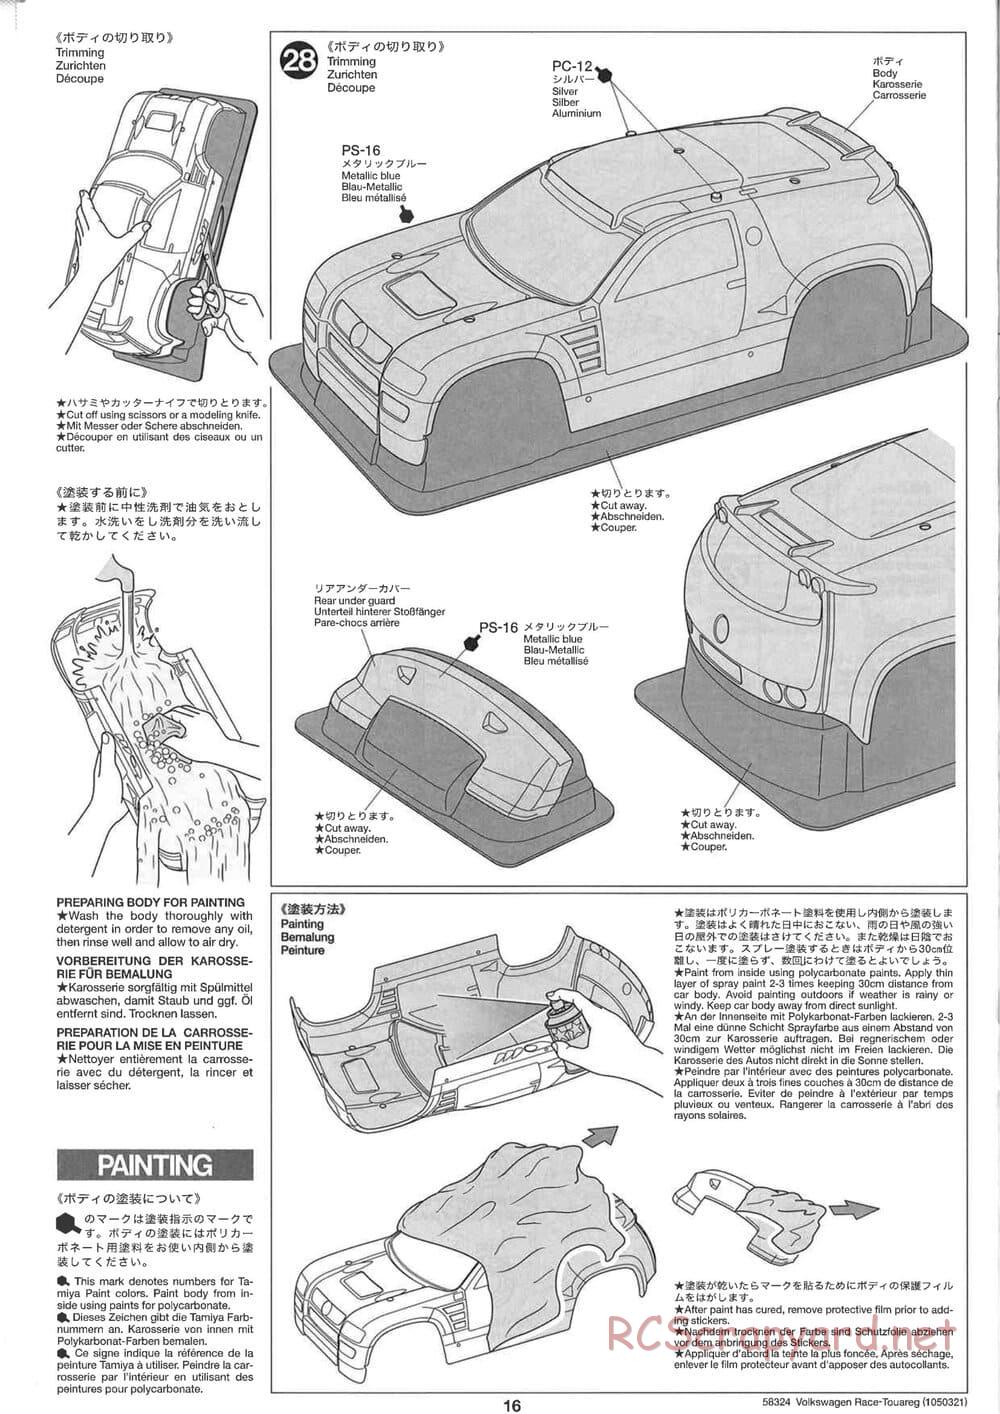 Tamiya - Volkswagen Race-Touareg - CC-01 Chassis - Manual - Page 16